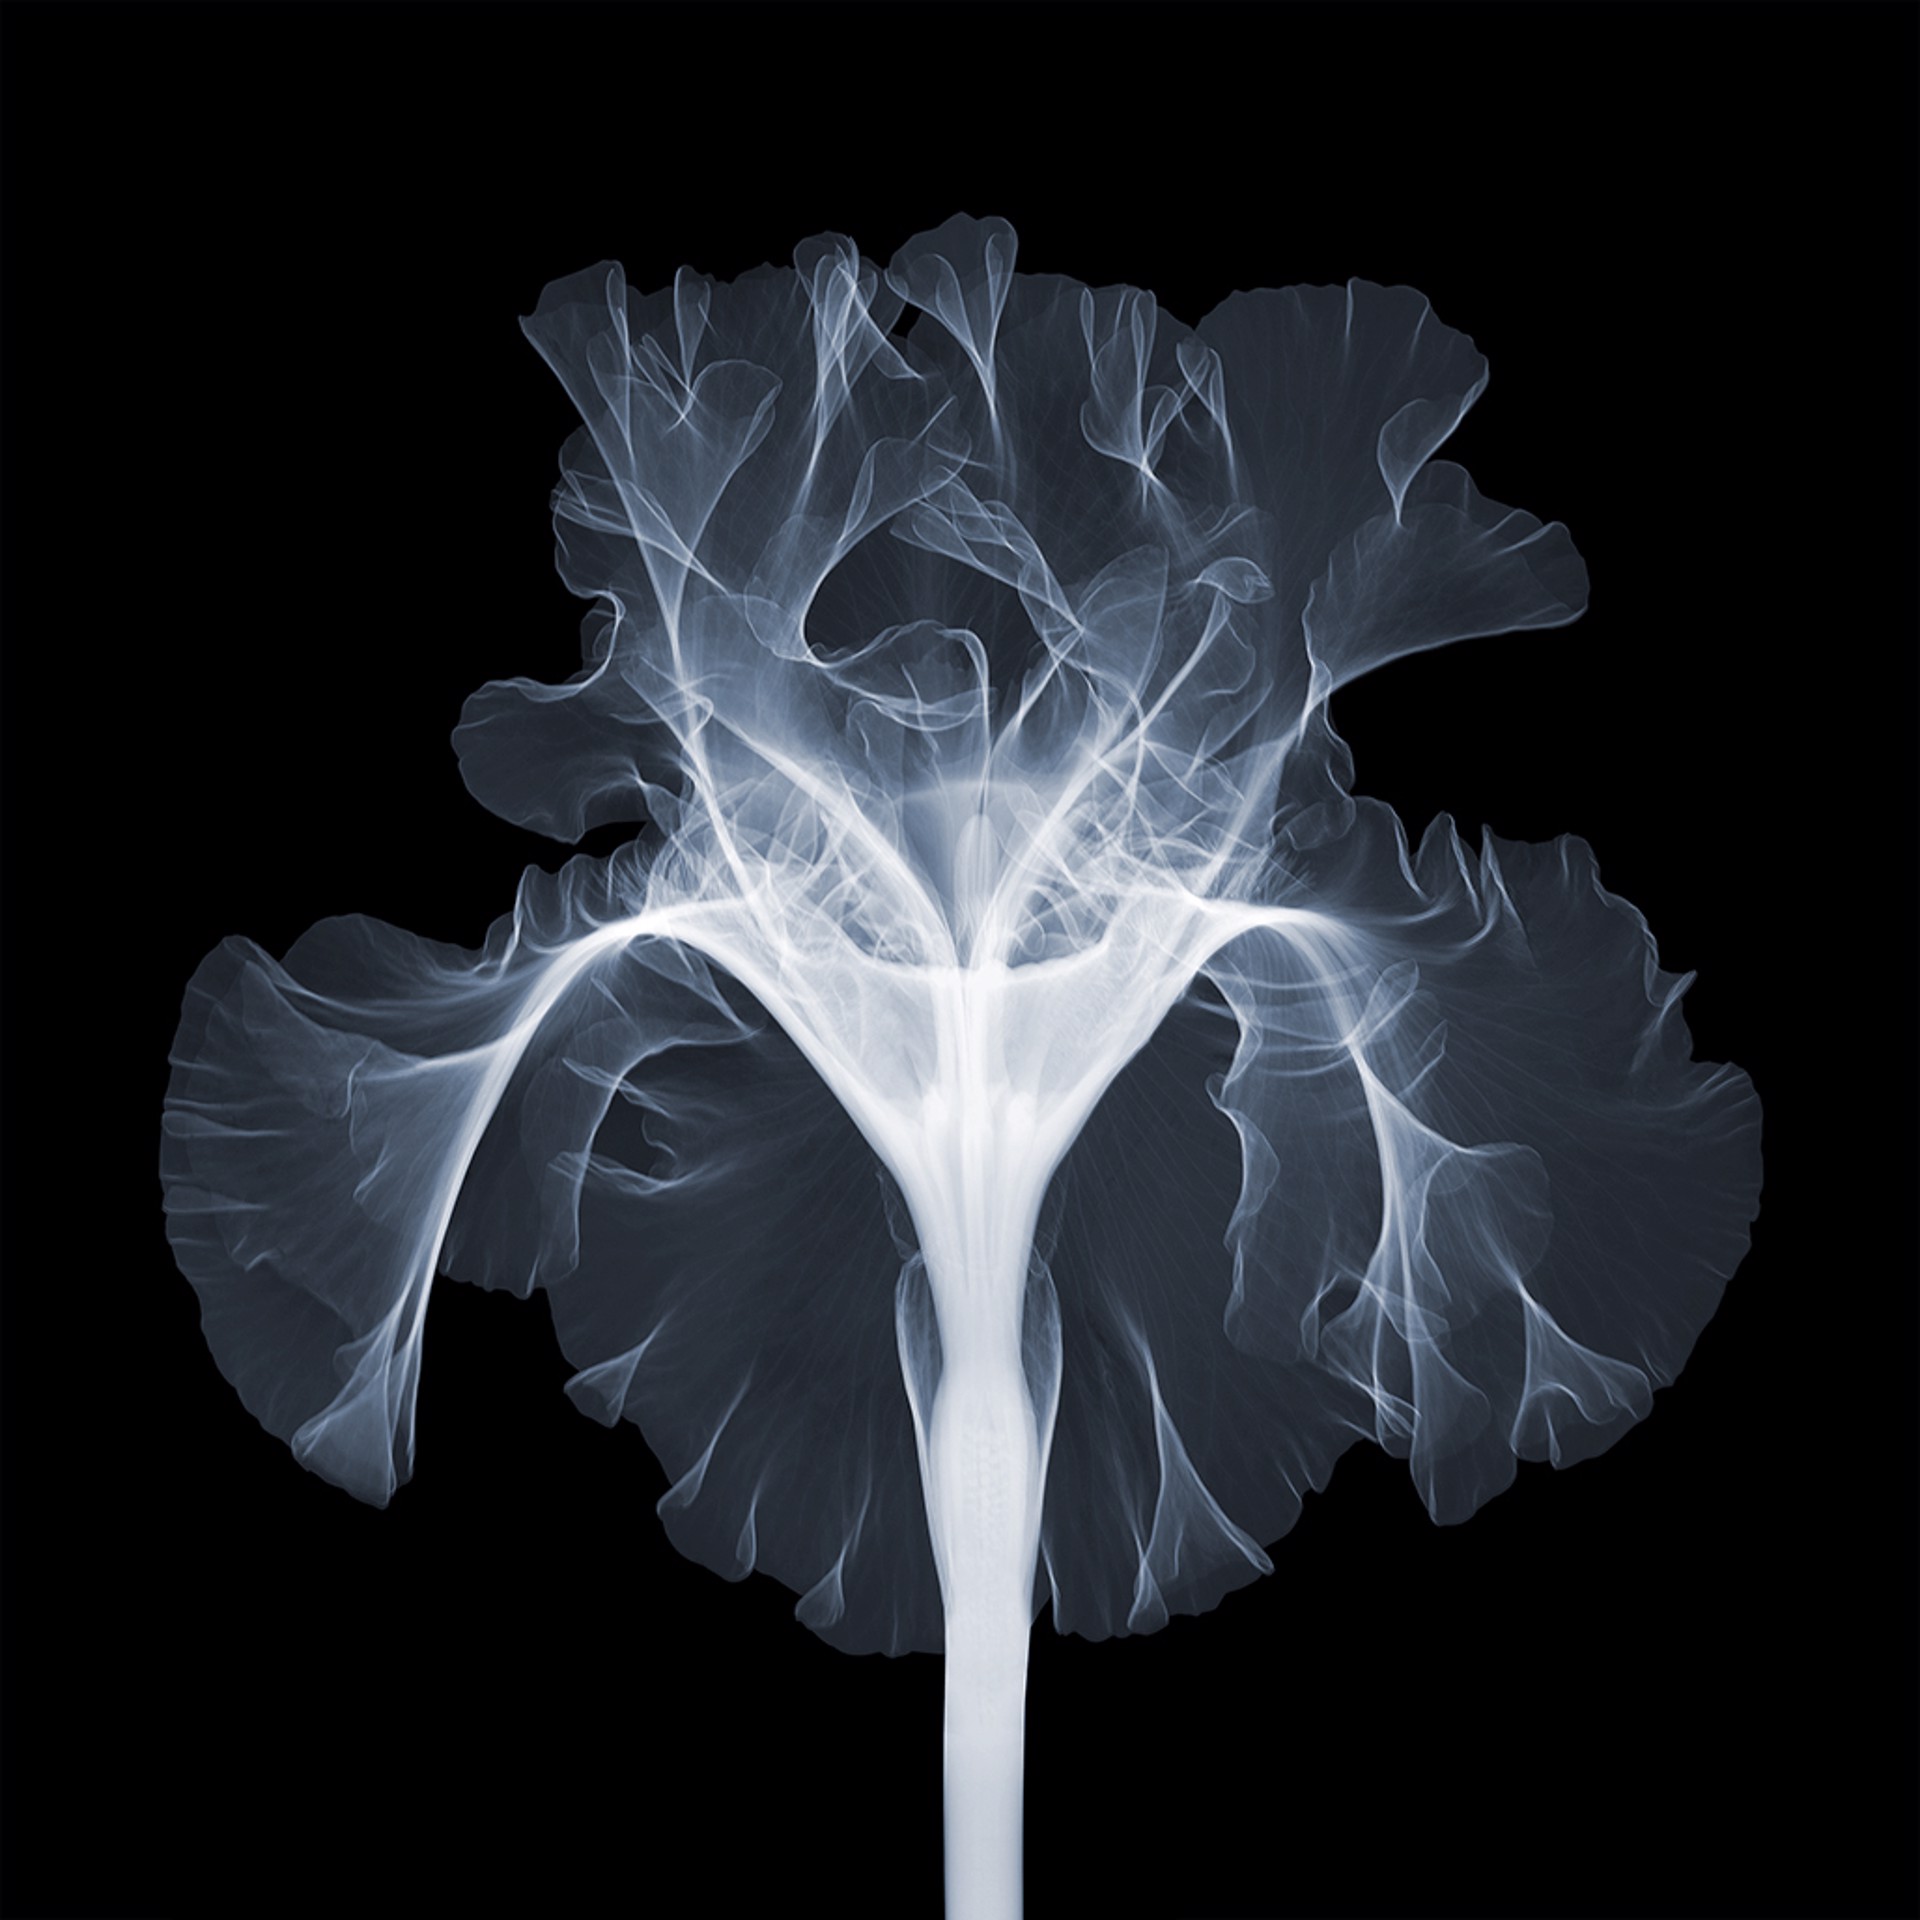 iris silverado by Nick Veasey